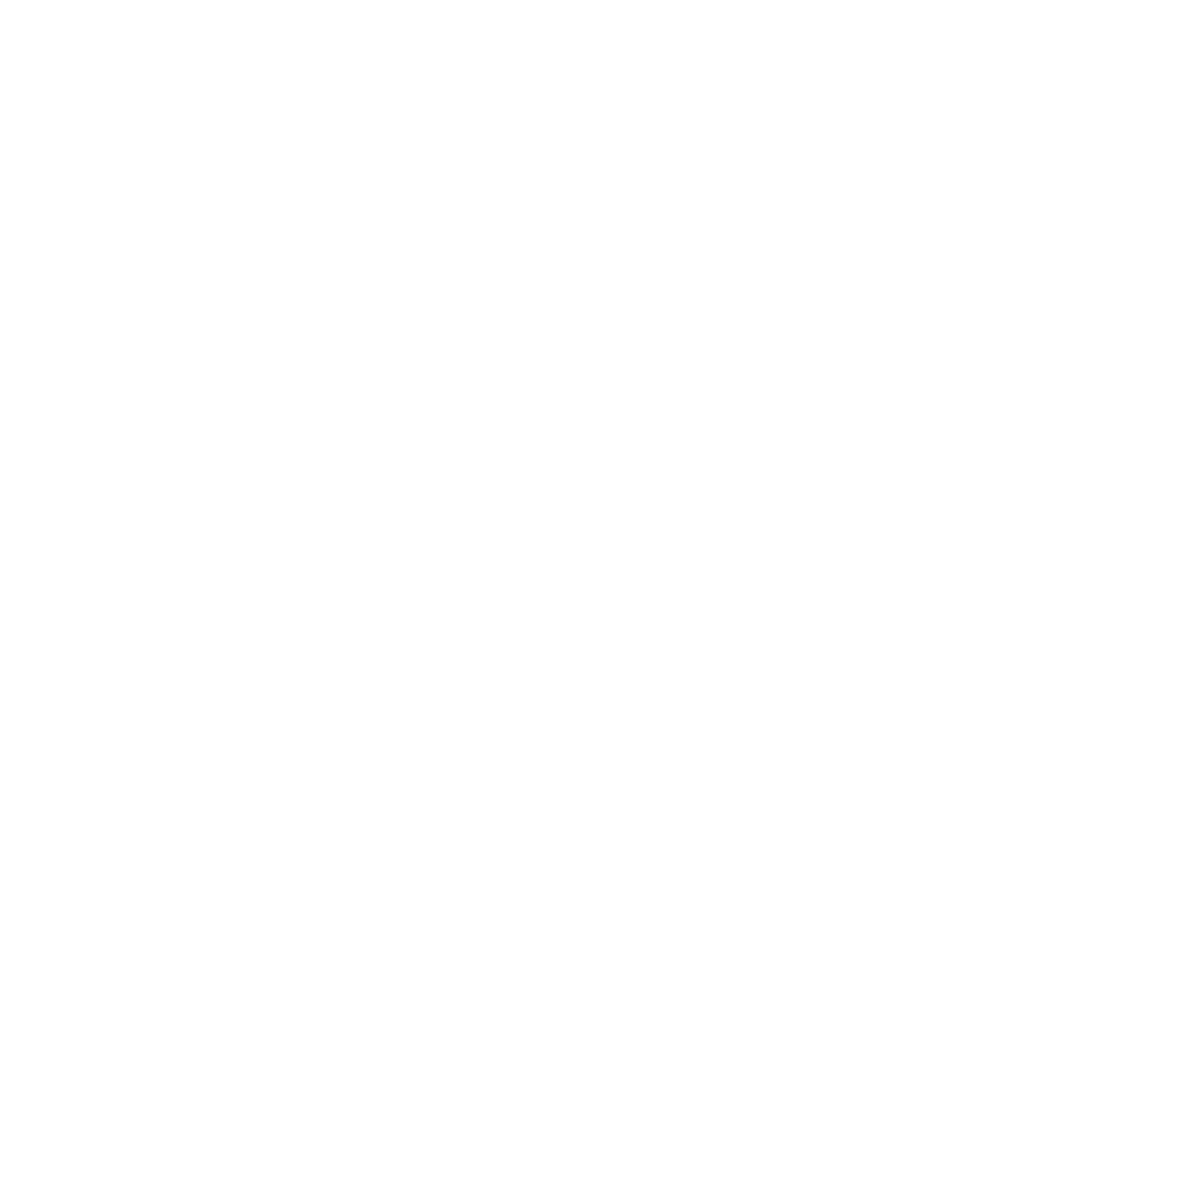 Icon of down arrow inside a cloud